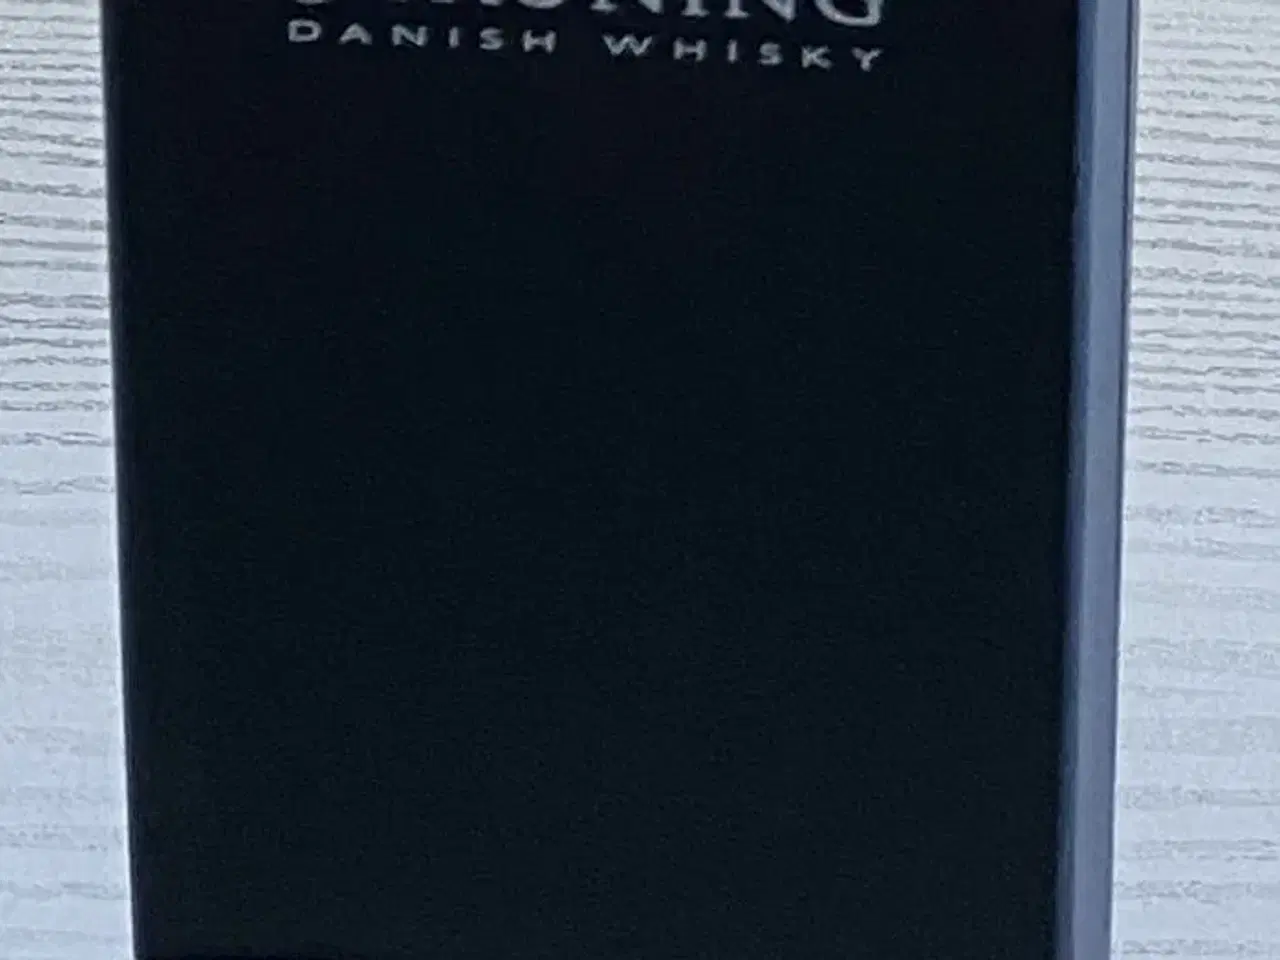 Billede 3 - Vinkasse, STAUNING Whisky